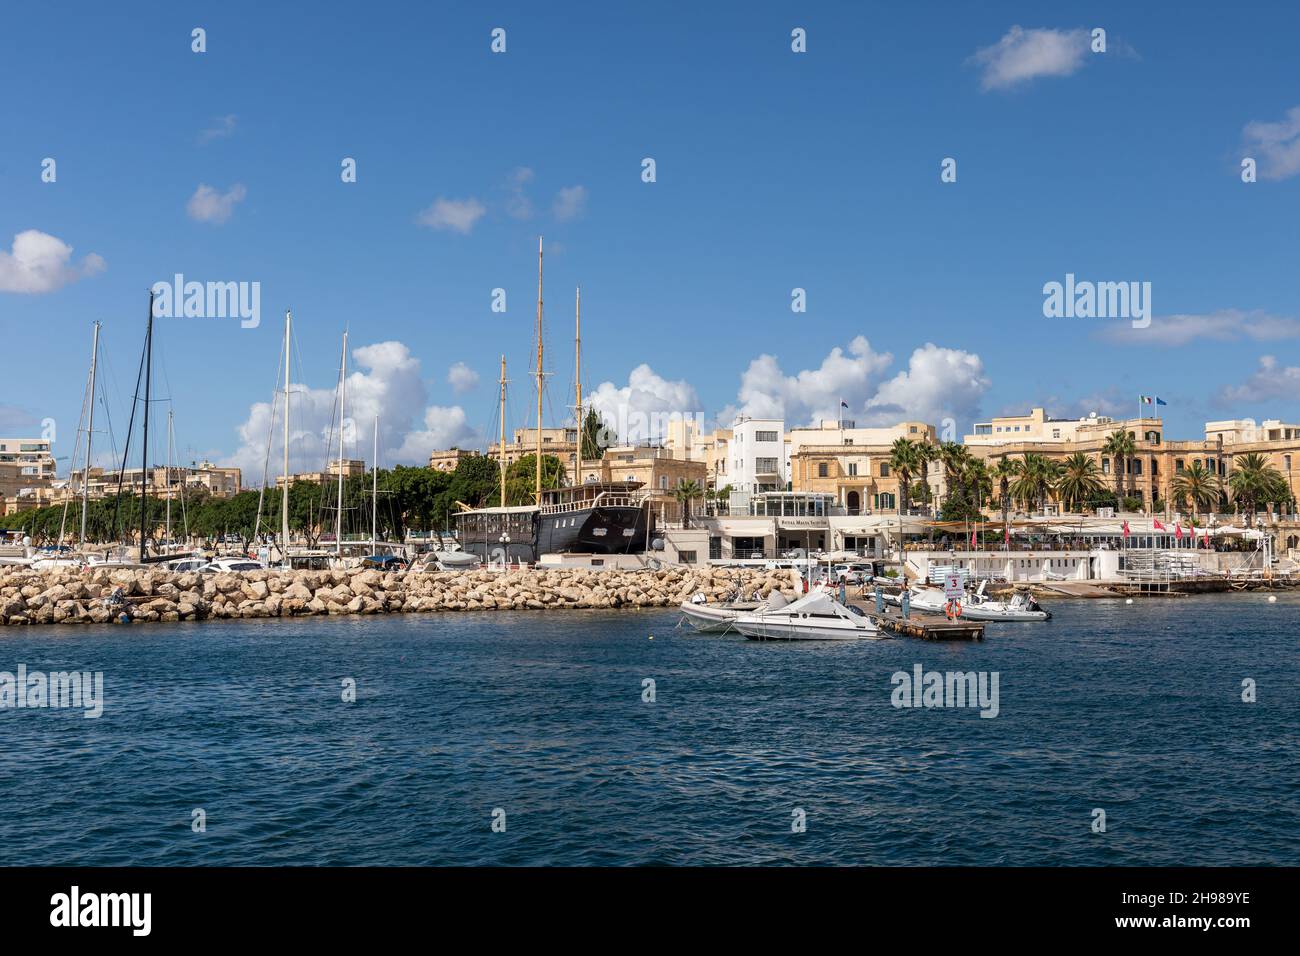 The Black Pearl Wooden Schooner now a restaurant beside Ta Xbiex Yacht Marina, Grand Harbour, Malta, Europe. Stock Photo